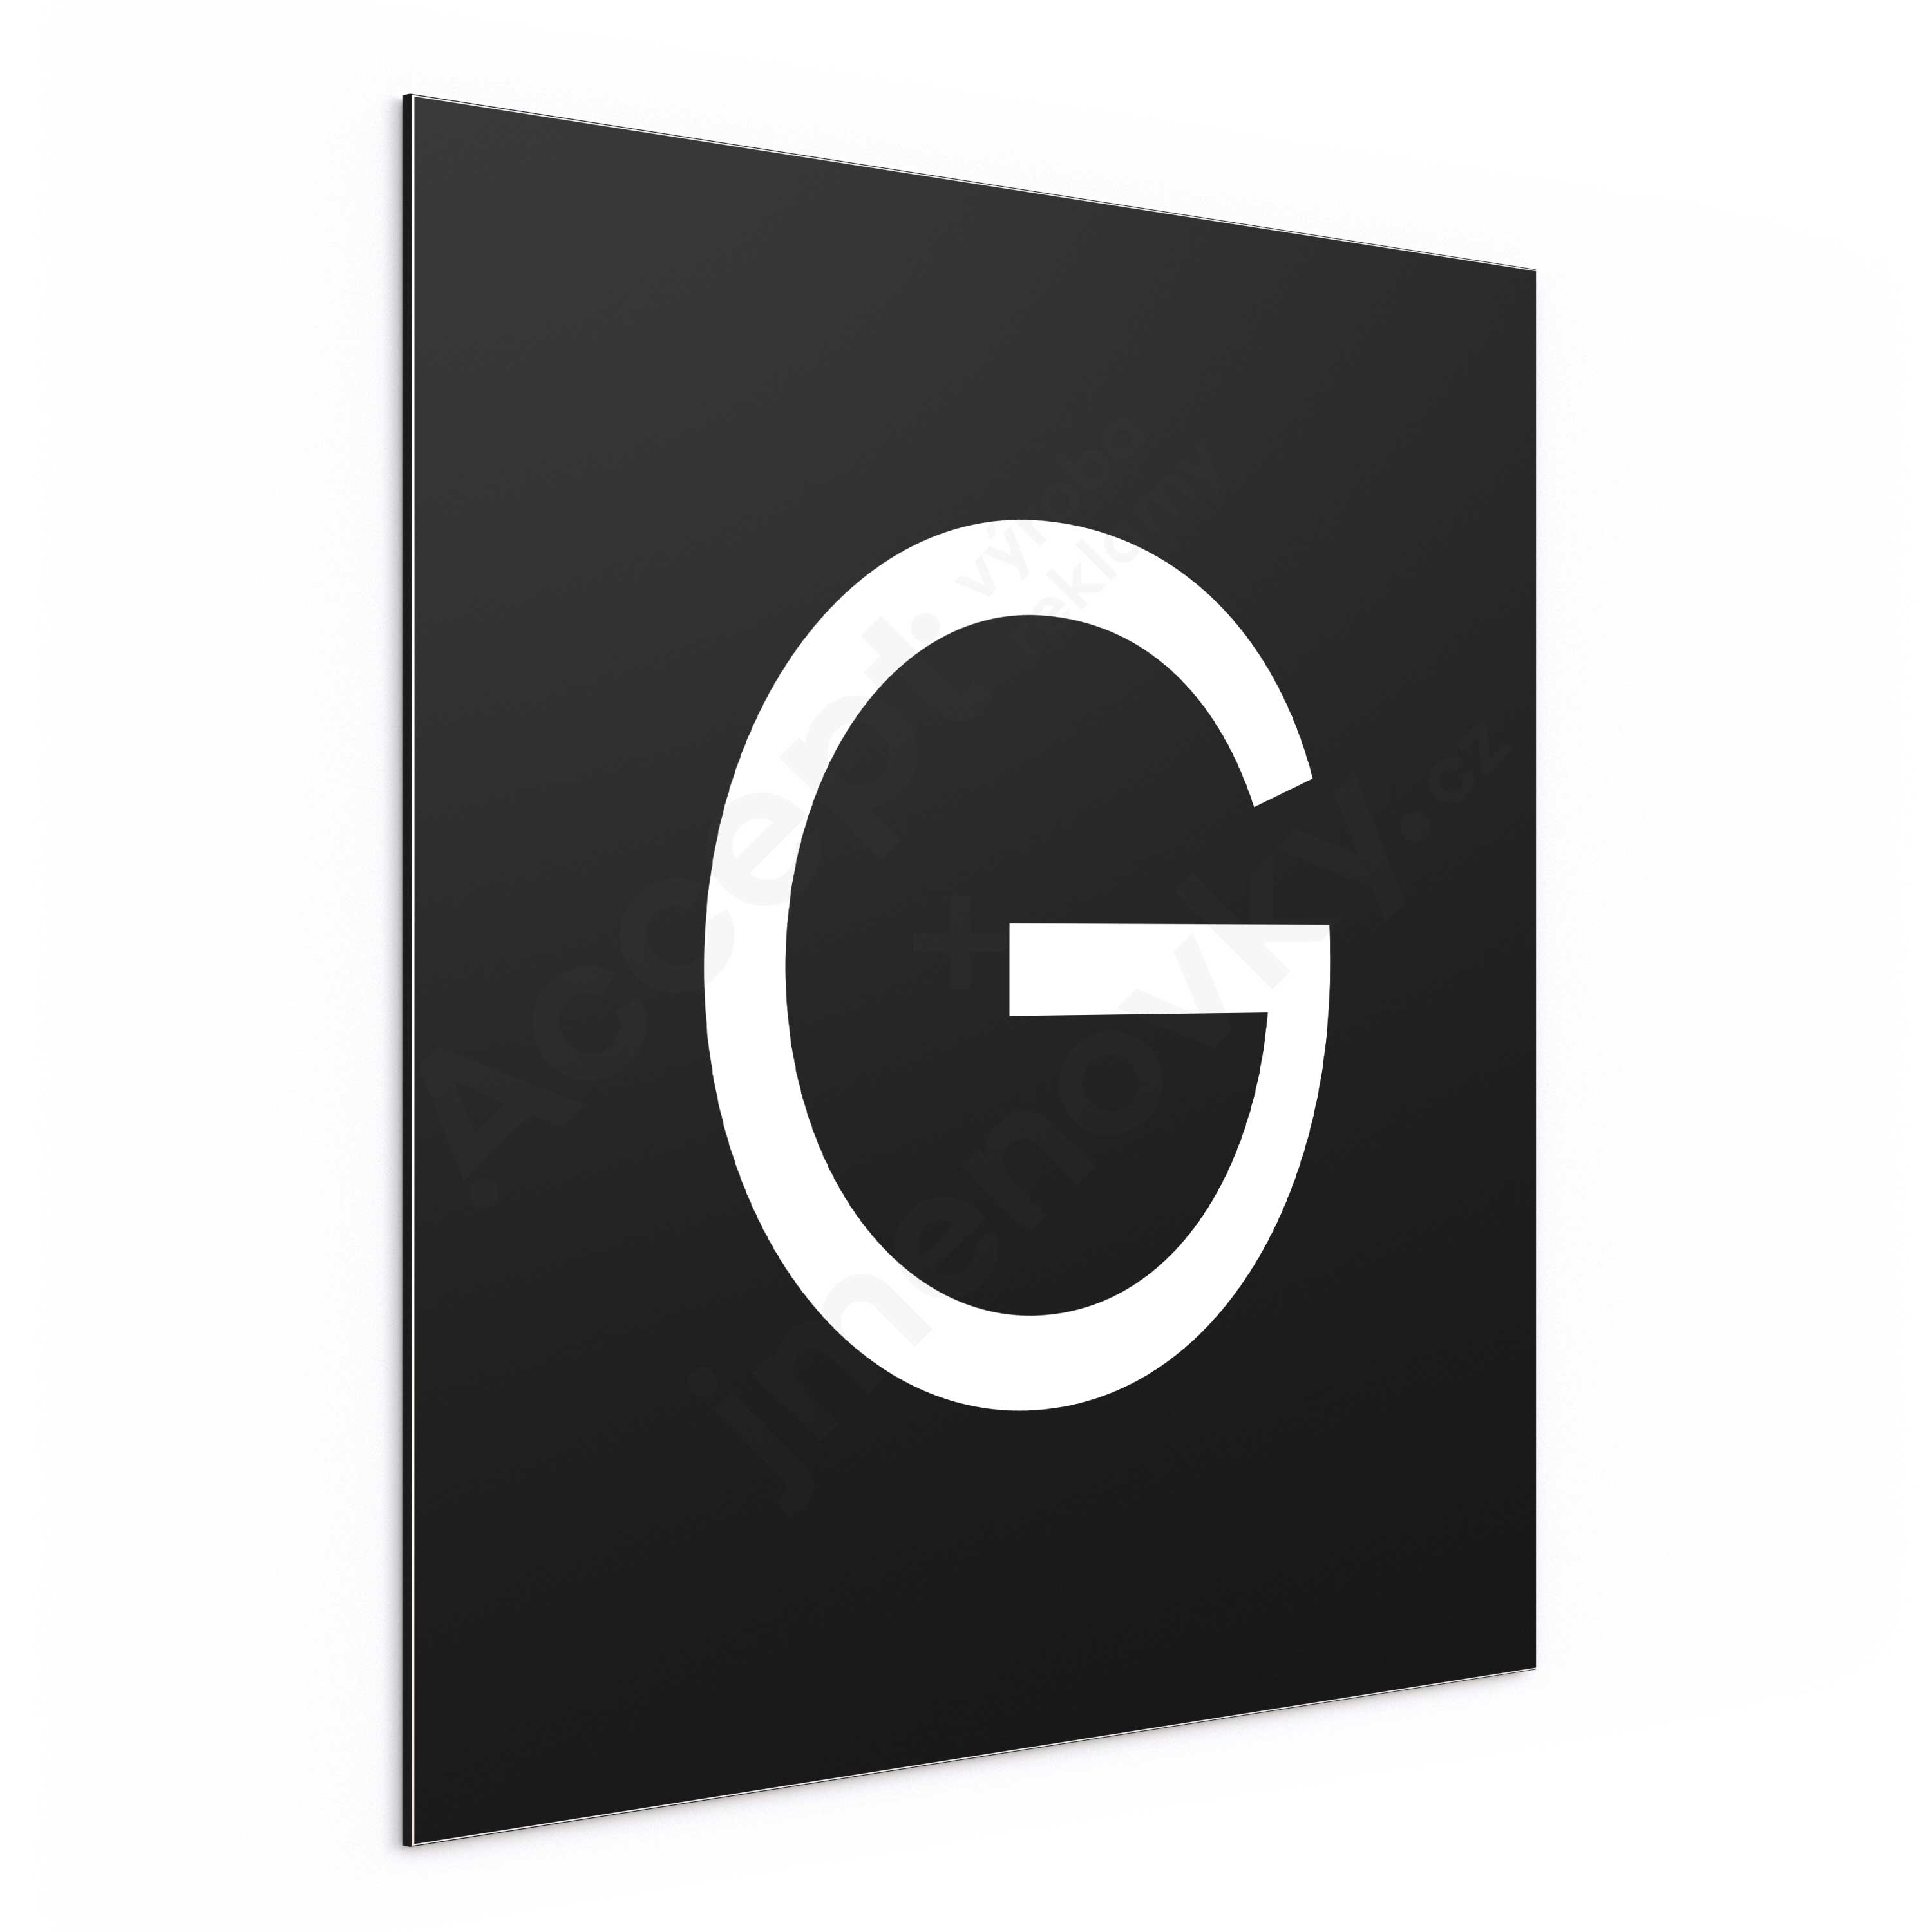 Označení podlaží - písmeno "G" - černá tabulka - bílý popis